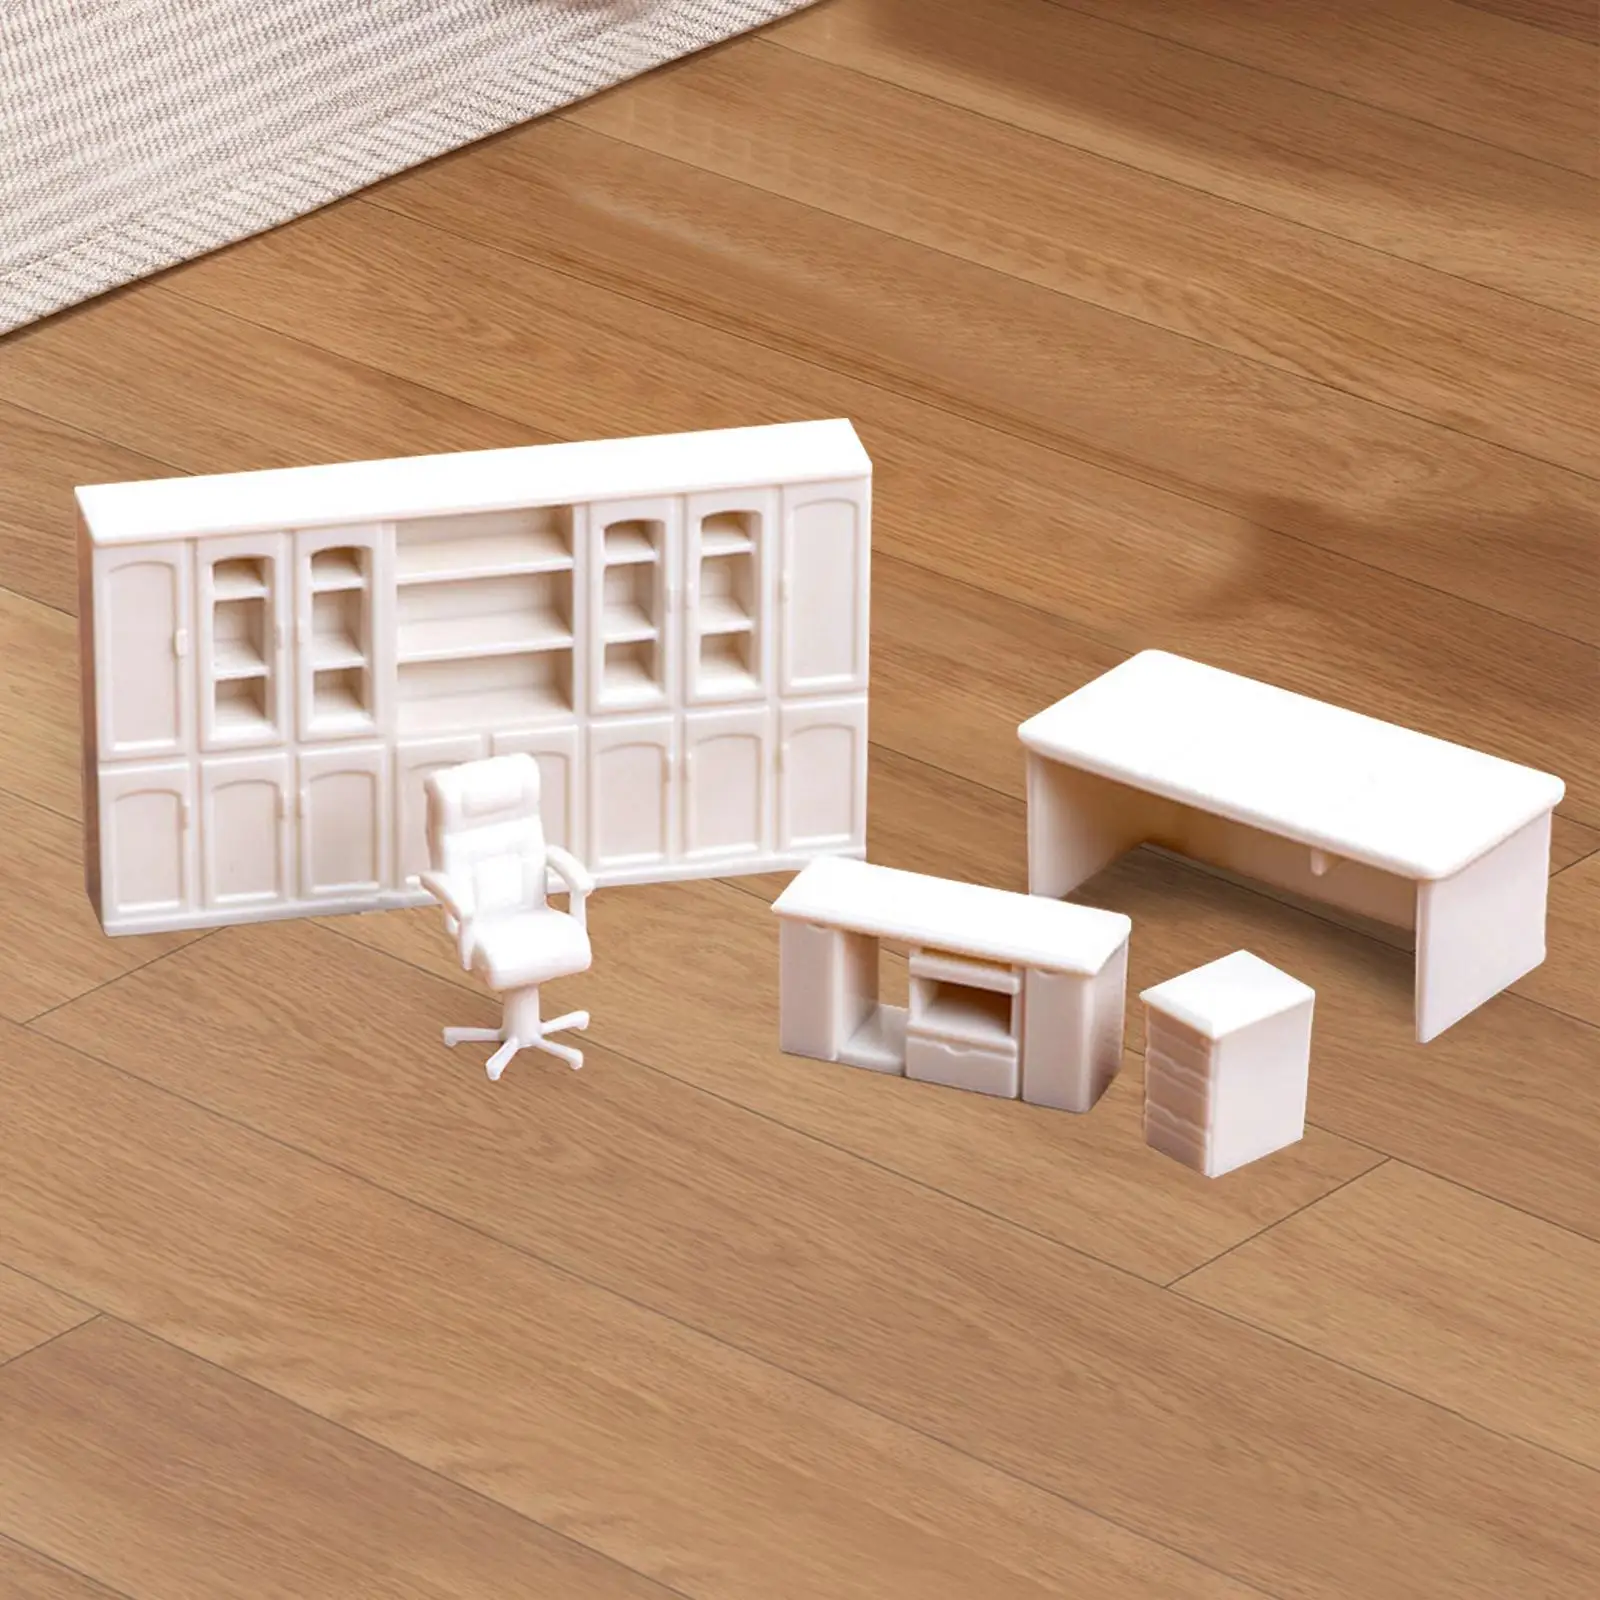 Miniature 1/50 Furniture Set Resin Mini Furniture Model for Dollhouse Decor Sand Table Decoration Photo Prop Diorama Layout